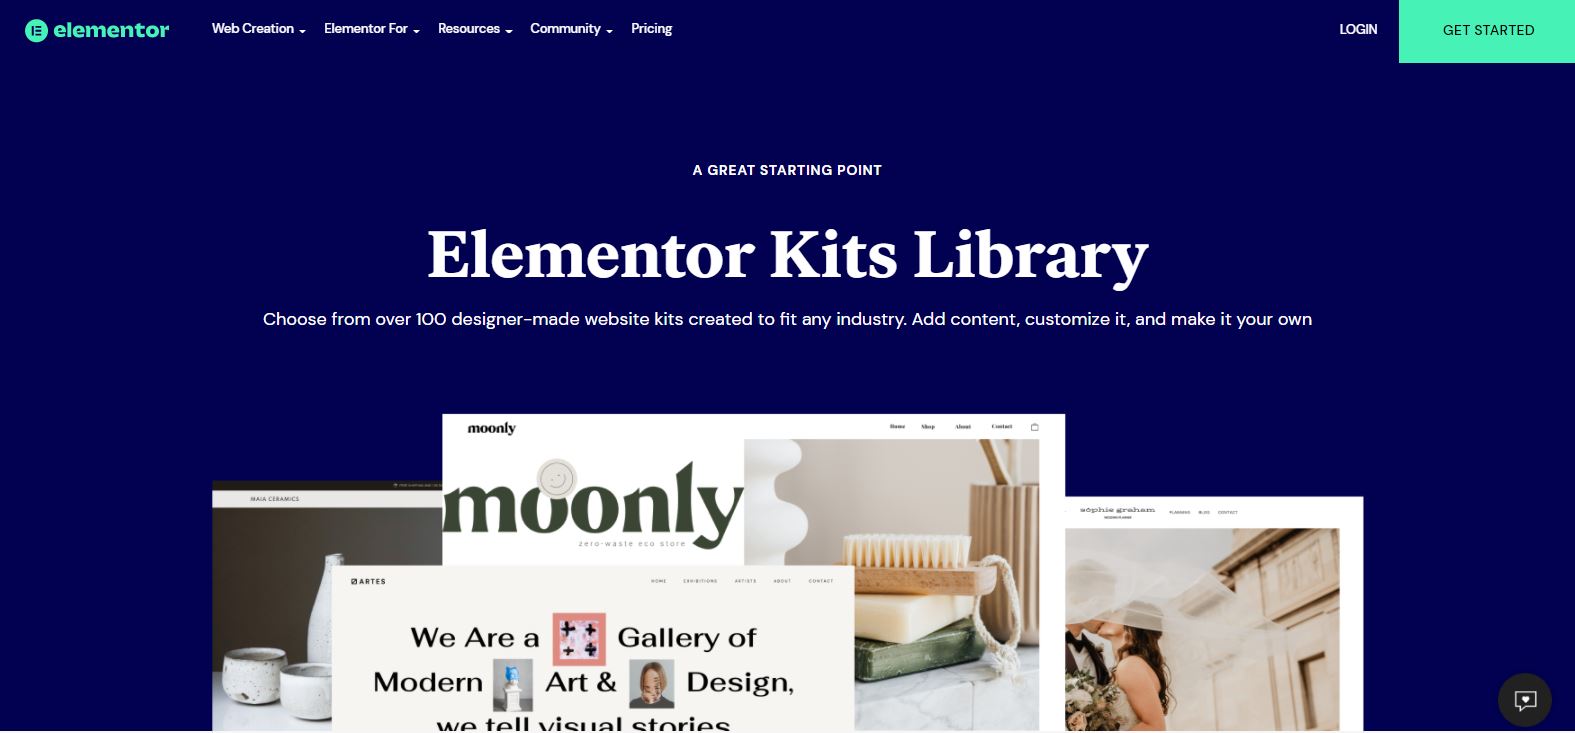 Elementor Kits Library